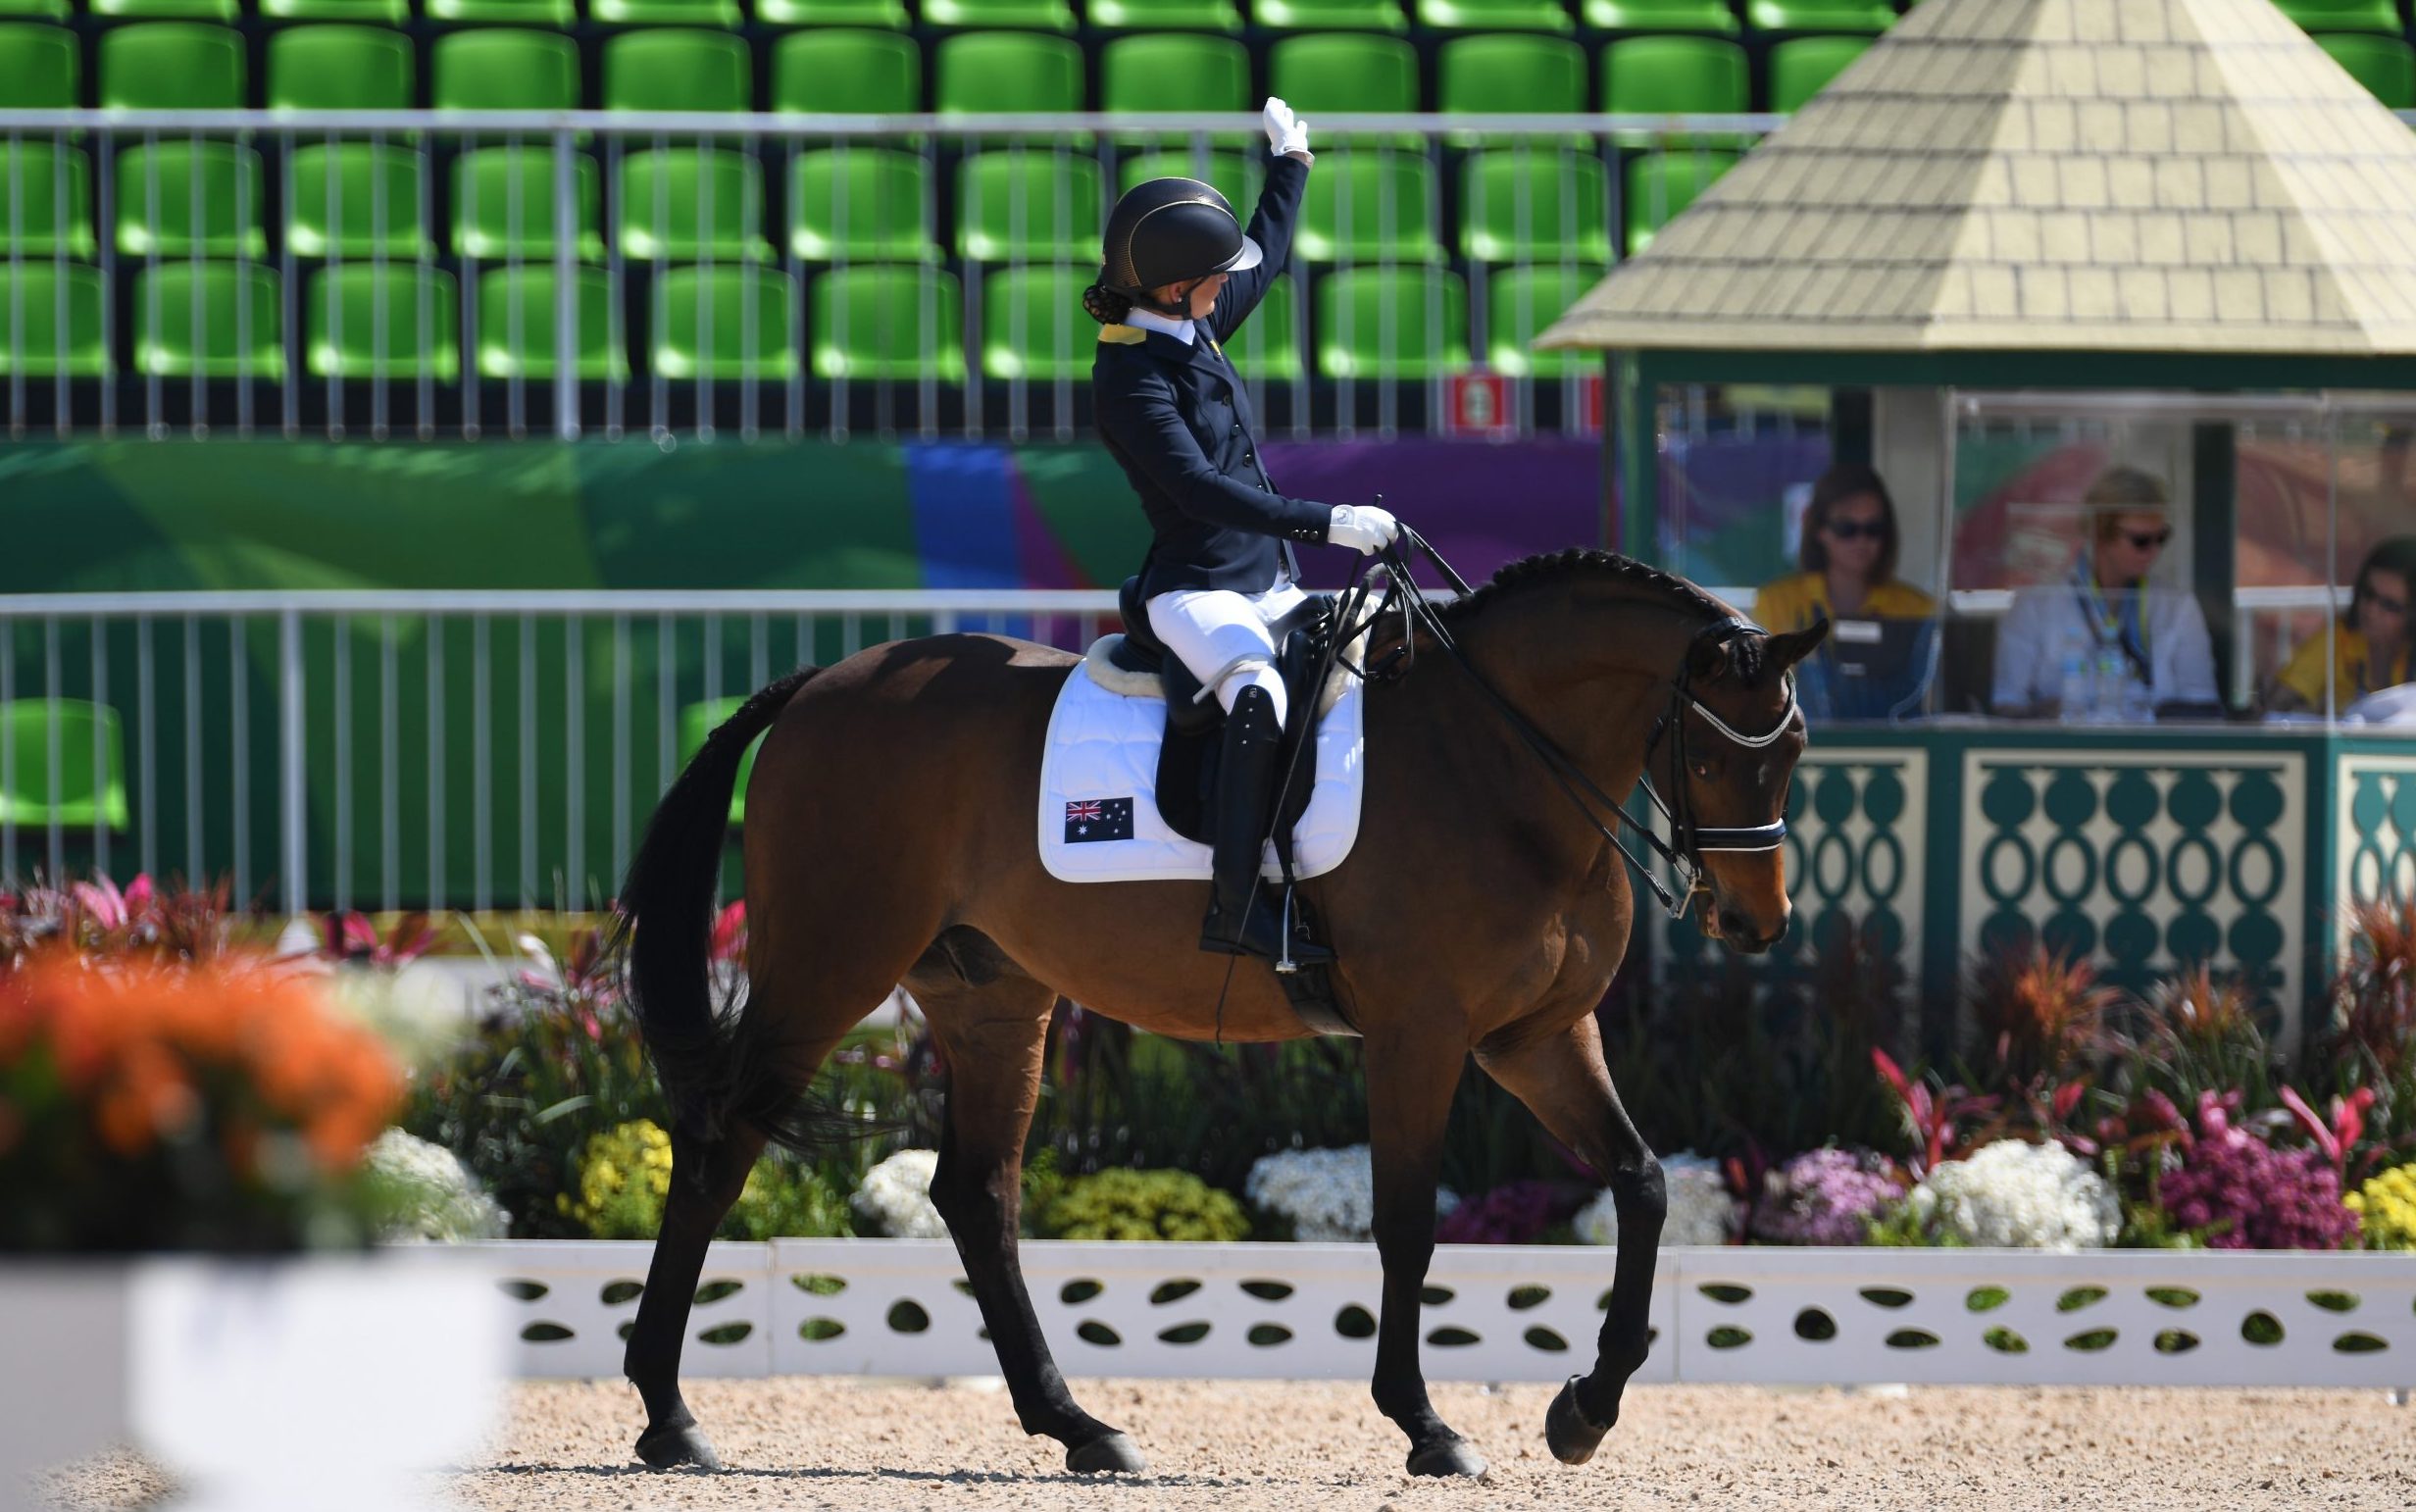 Para-equestrian athletes shine at Dressage Festival